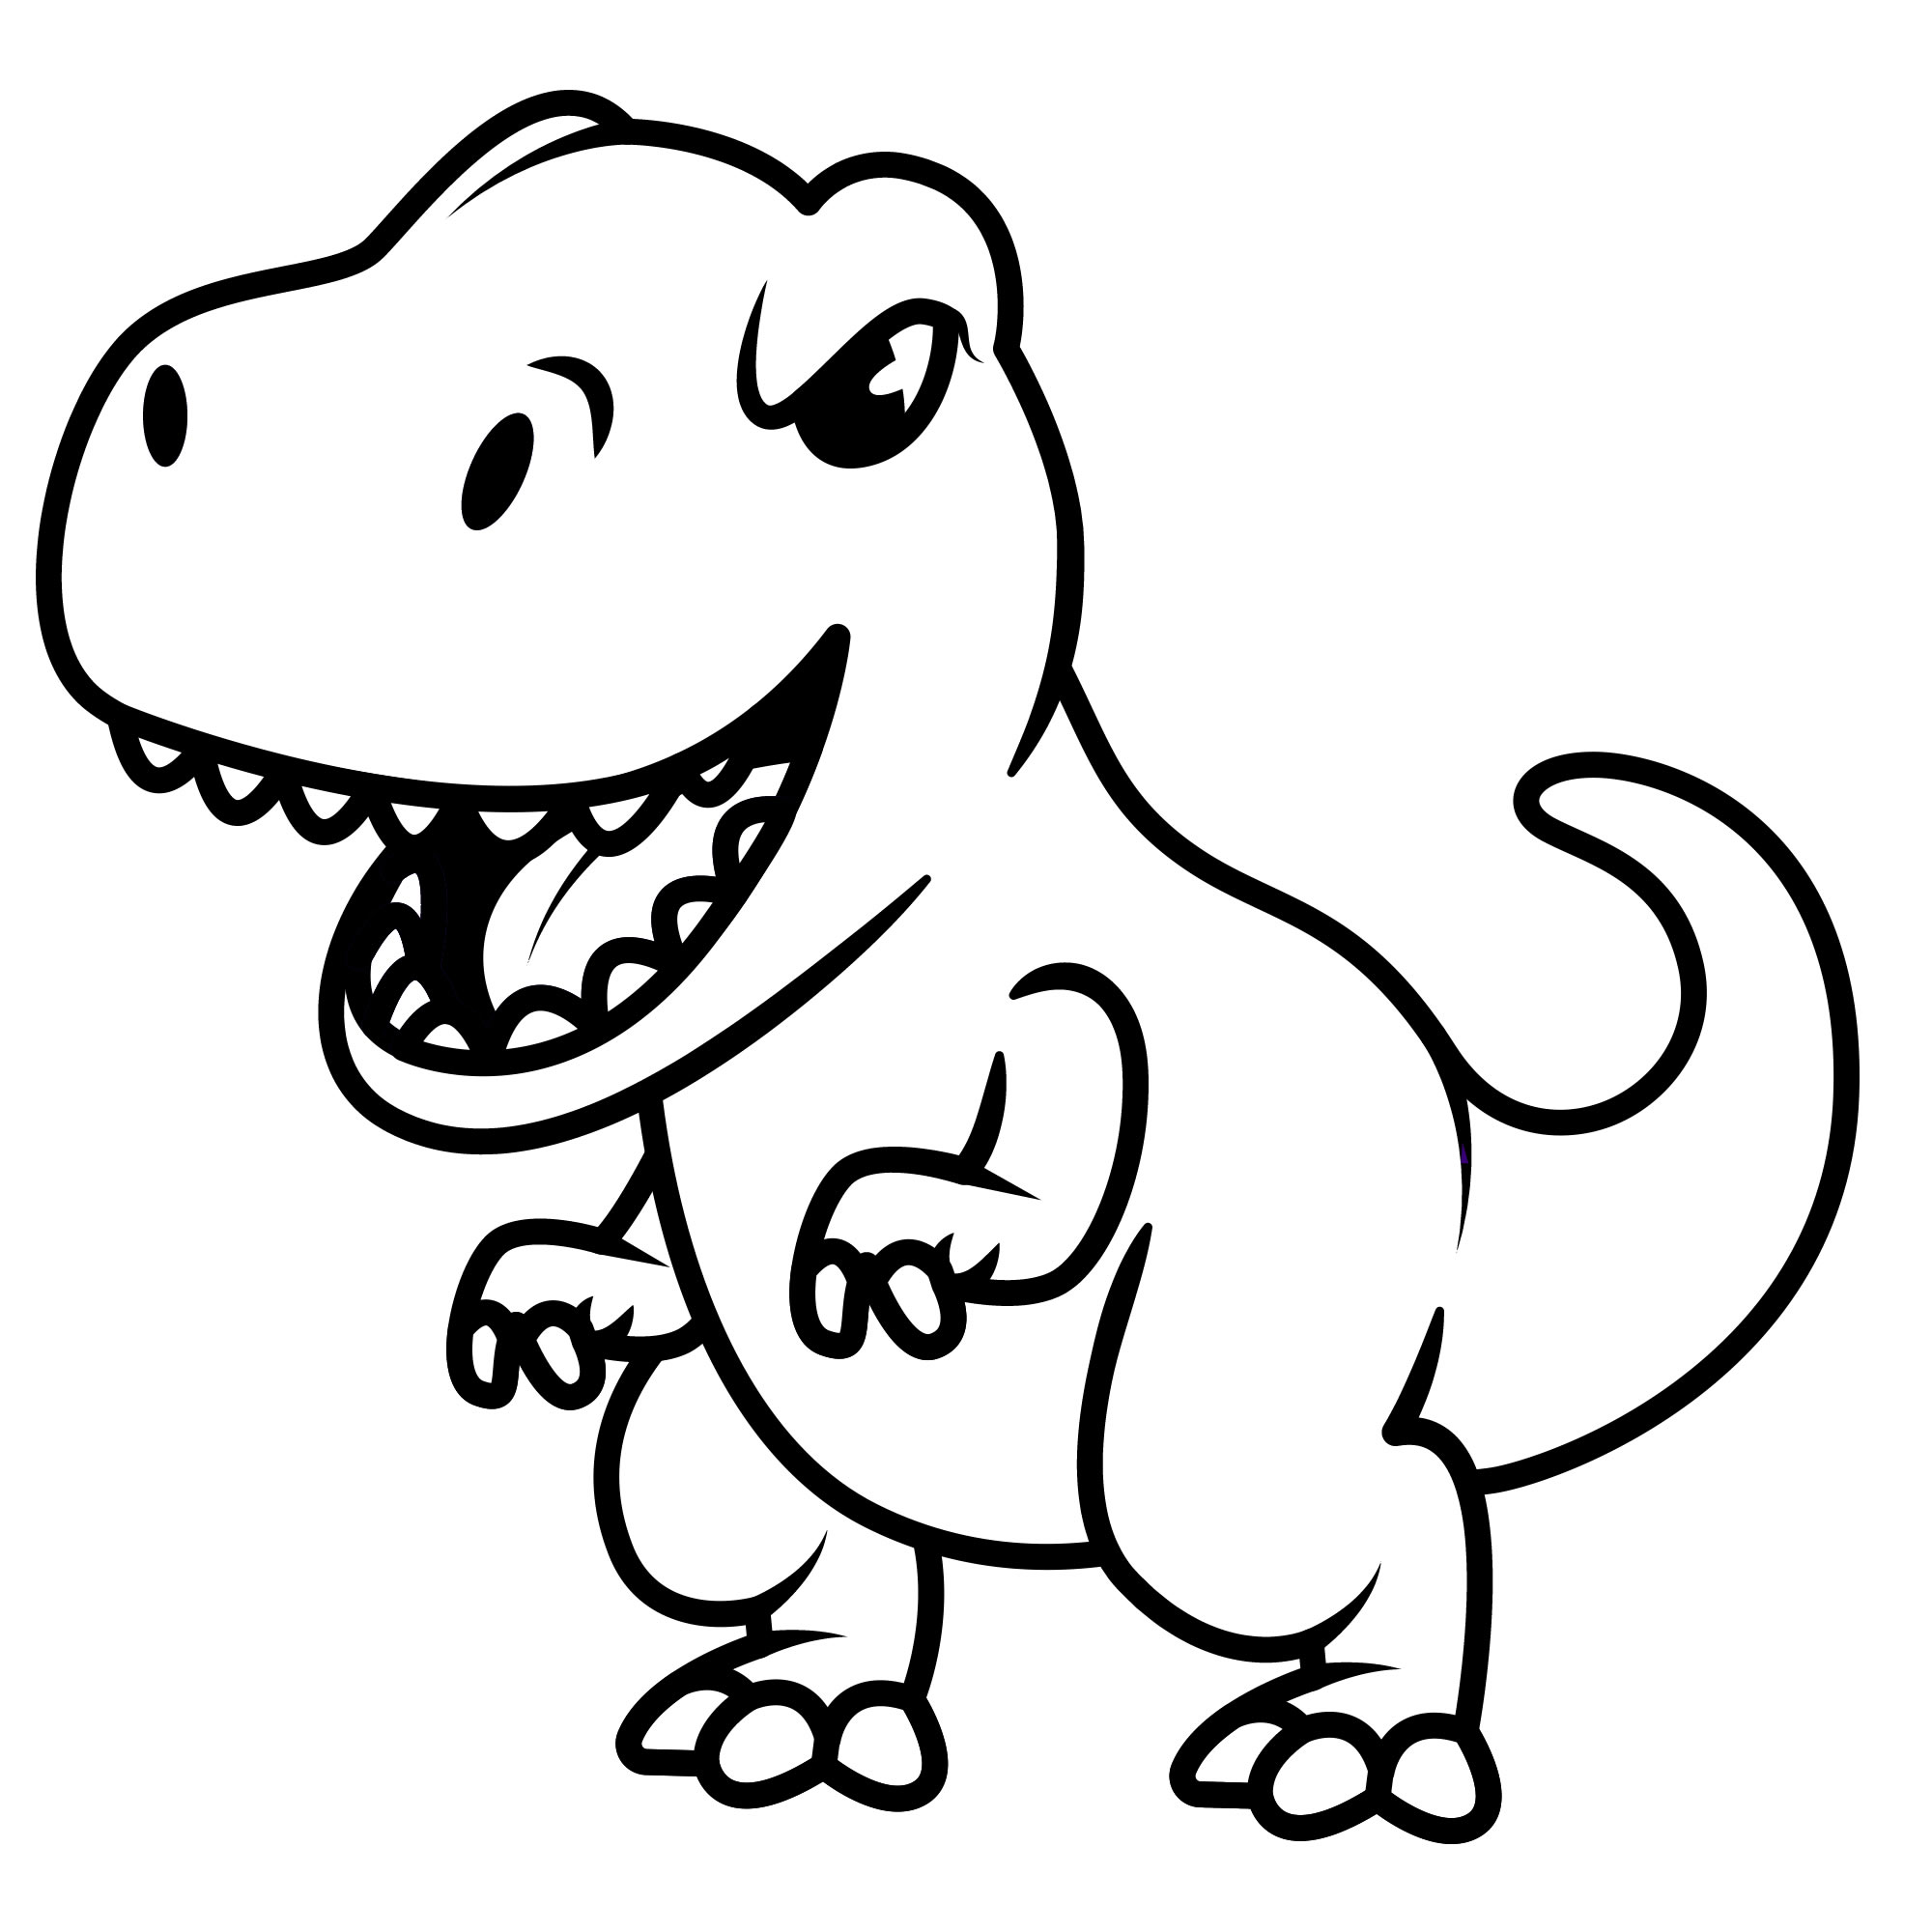 Тираннозавр раскраска